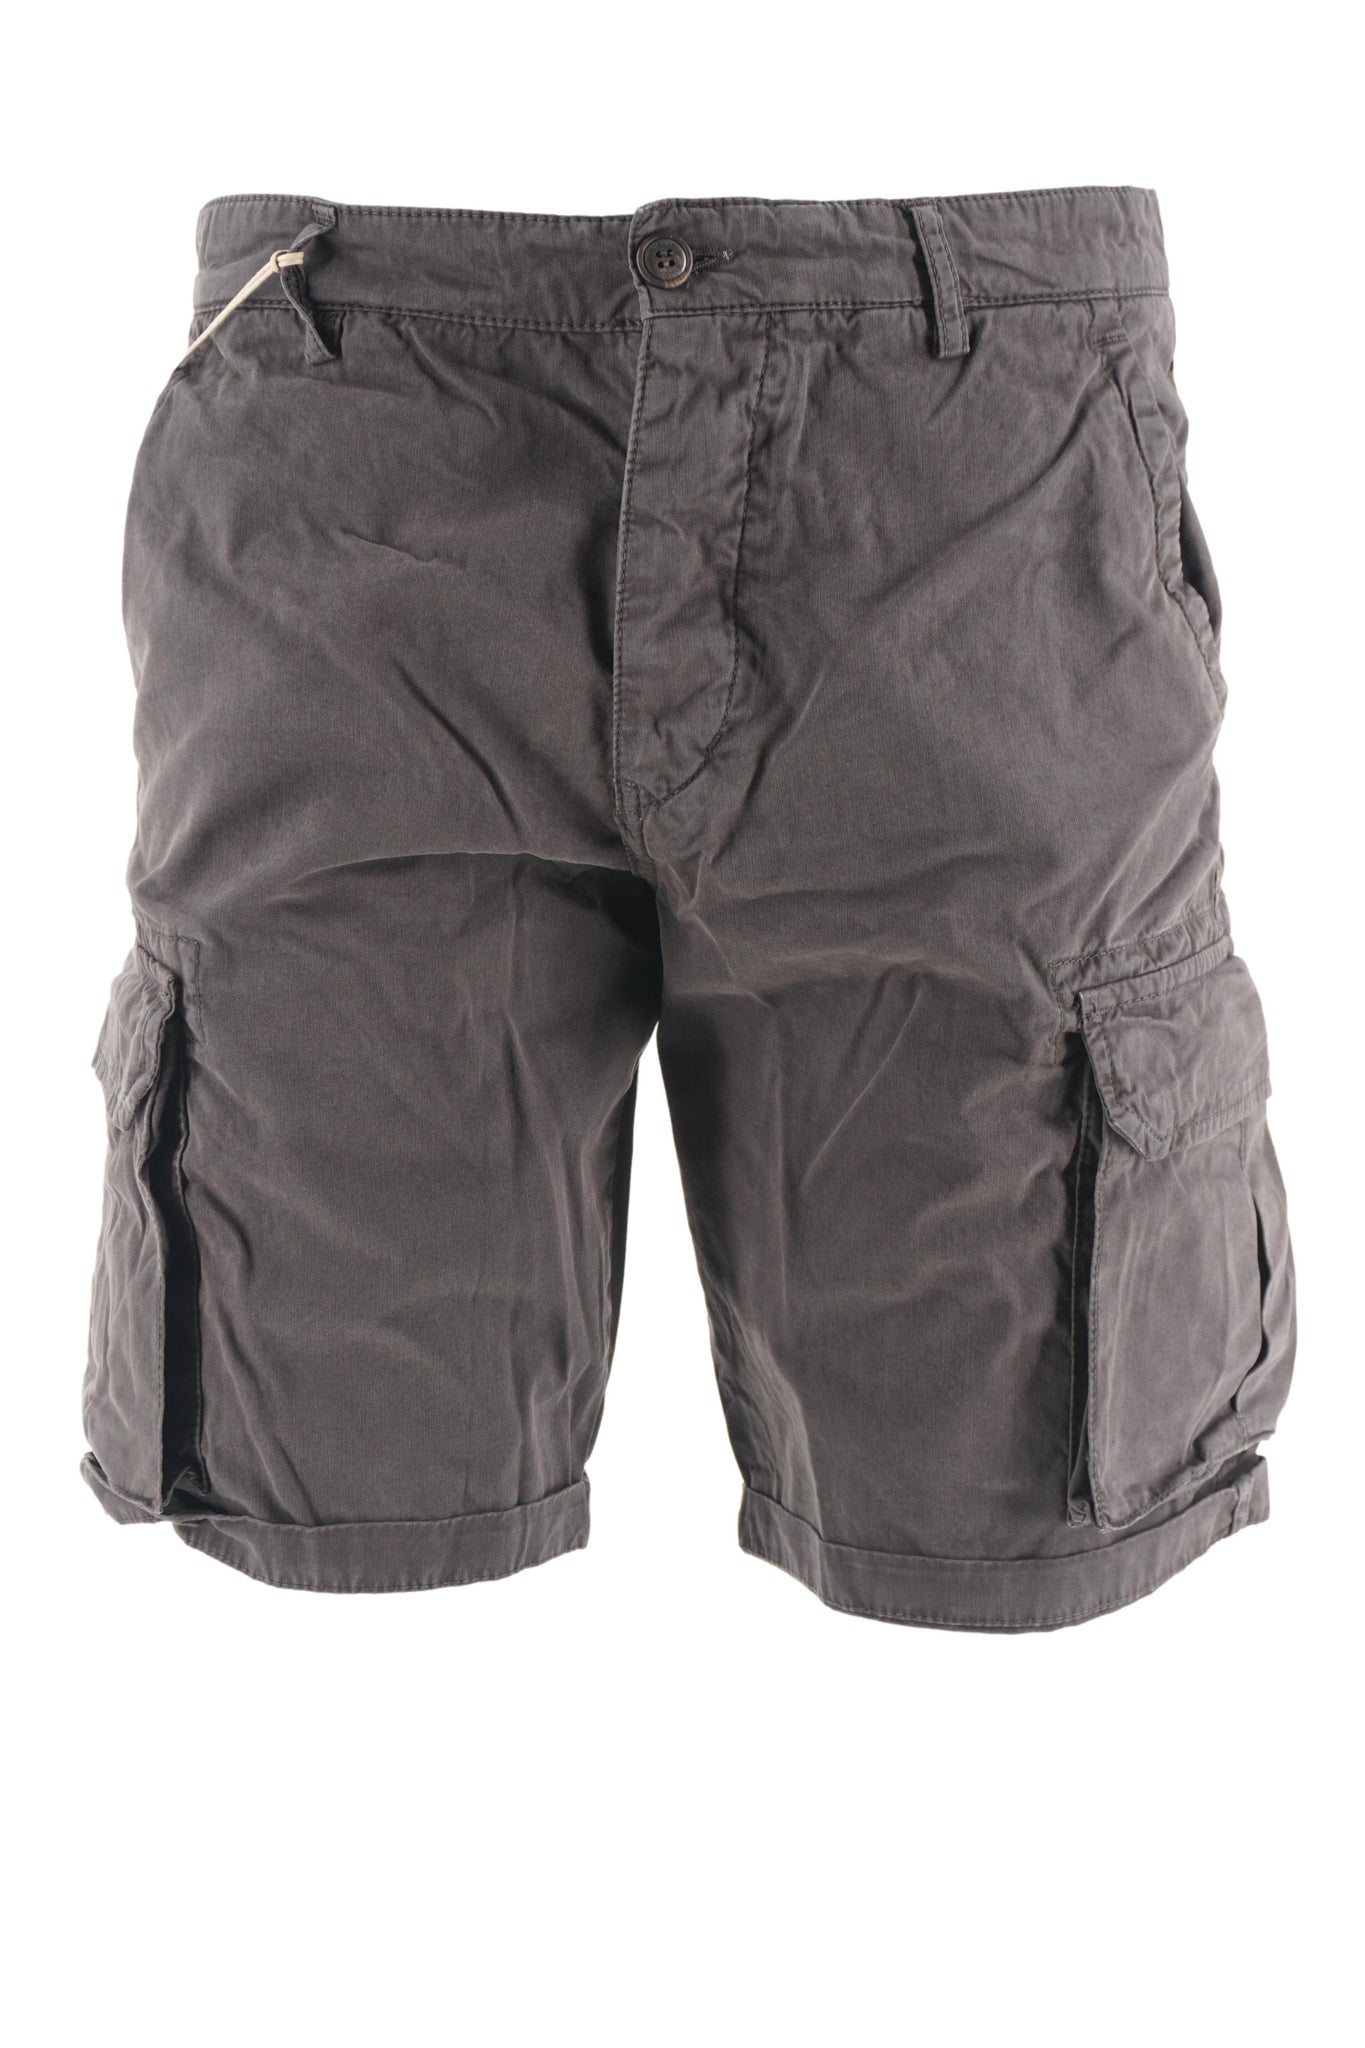 Pantaloncino Tasconato Modello Nick / Nero - Ideal Moda